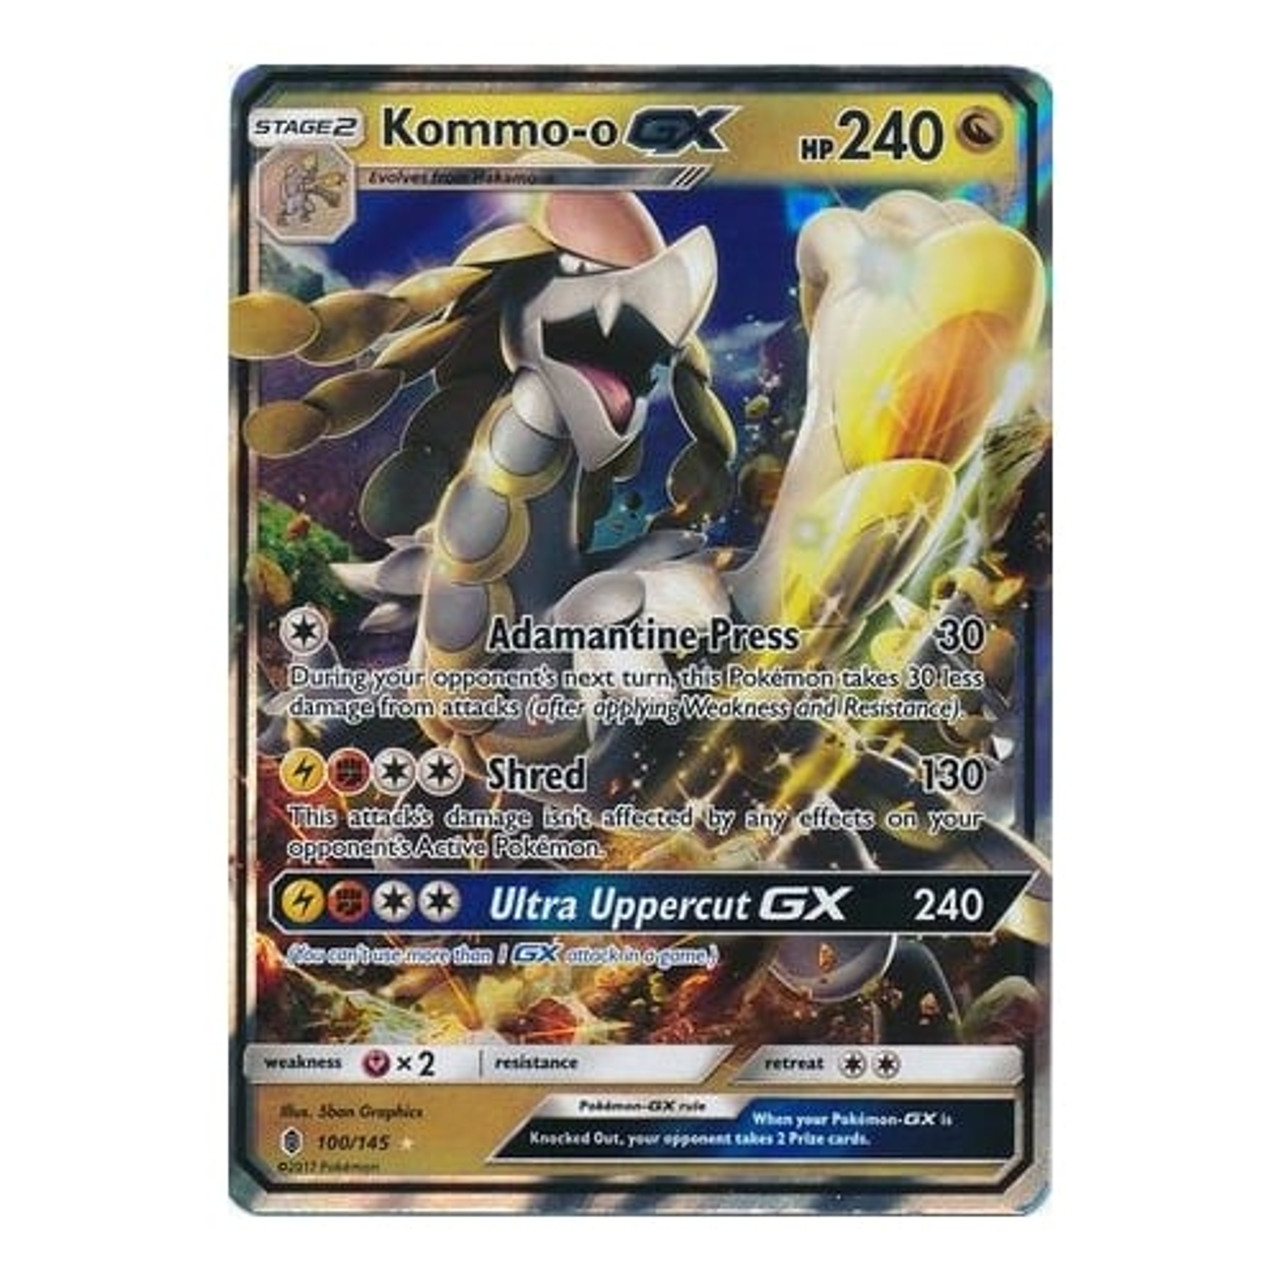 Pokémon TCG: Kommo-o-GX Box